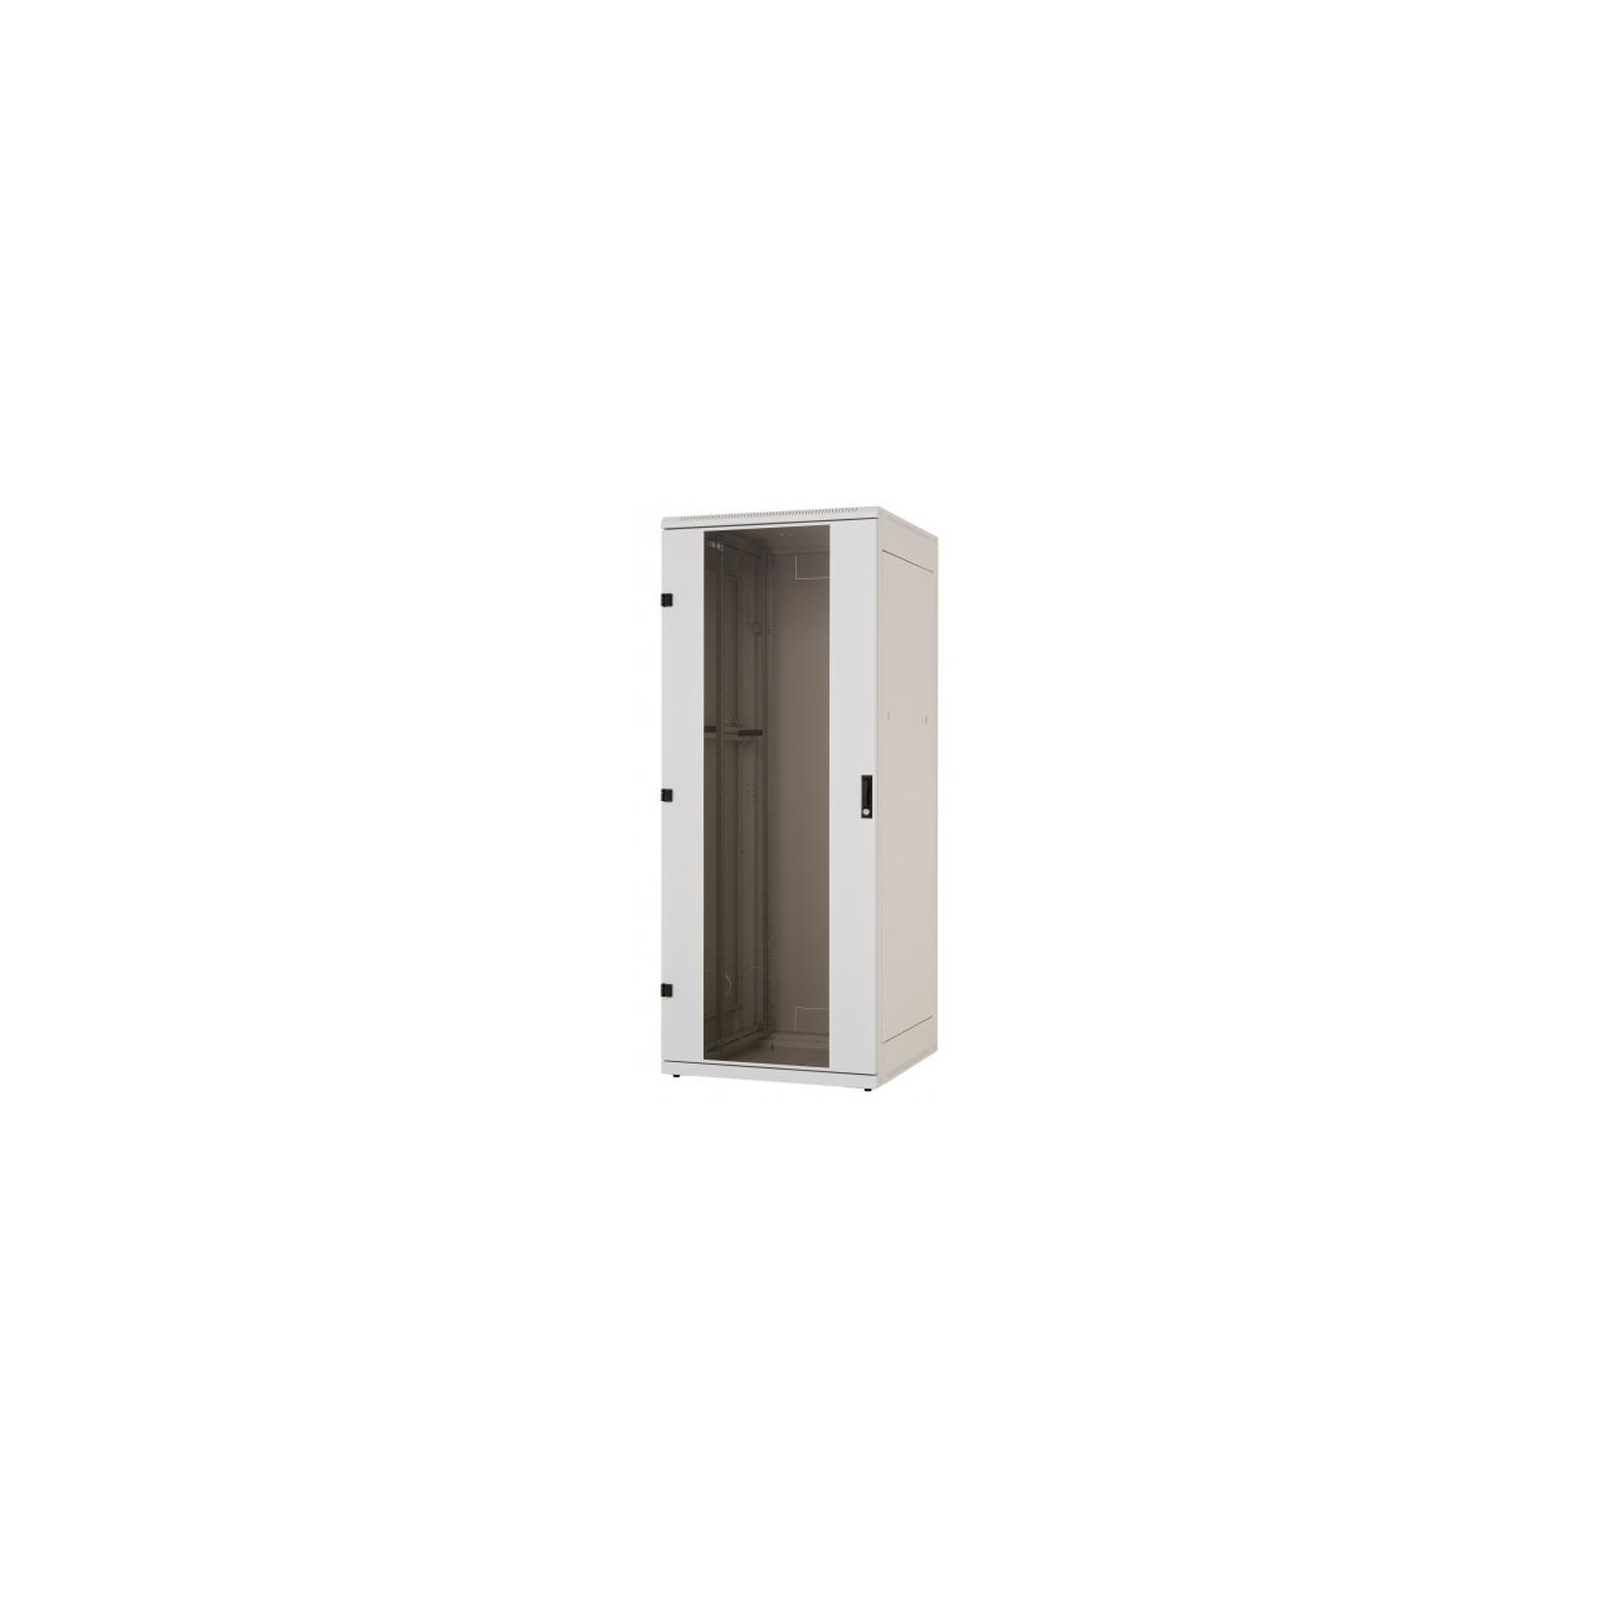 Шкаф напольный Triton 45U 2105x800x1000 (RMA-45-A81-CAX-A1)